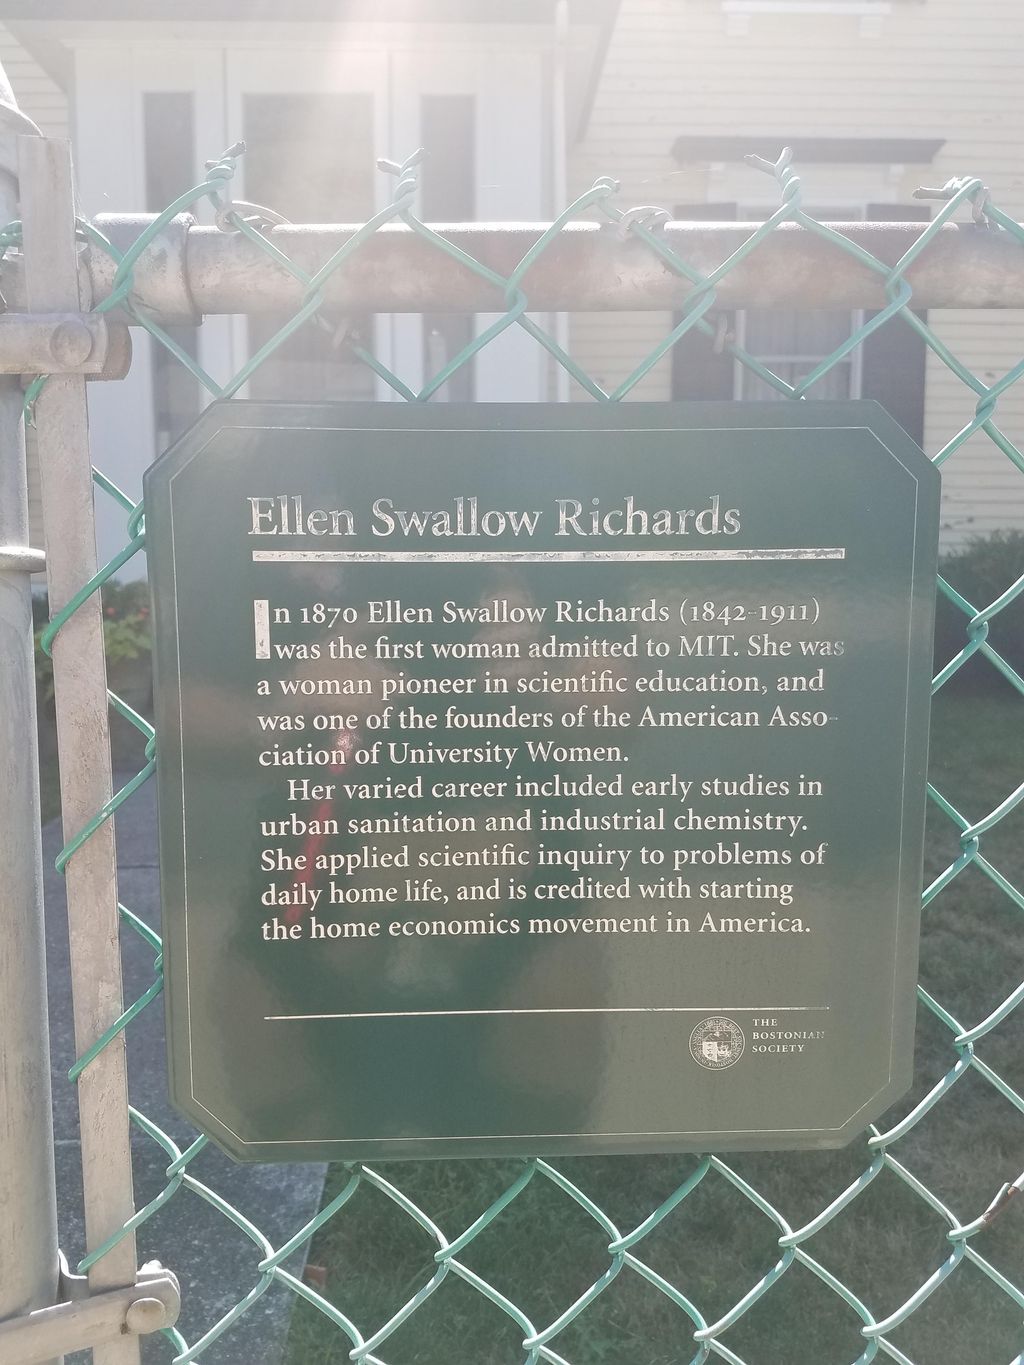 Ellen Swallow Richards House